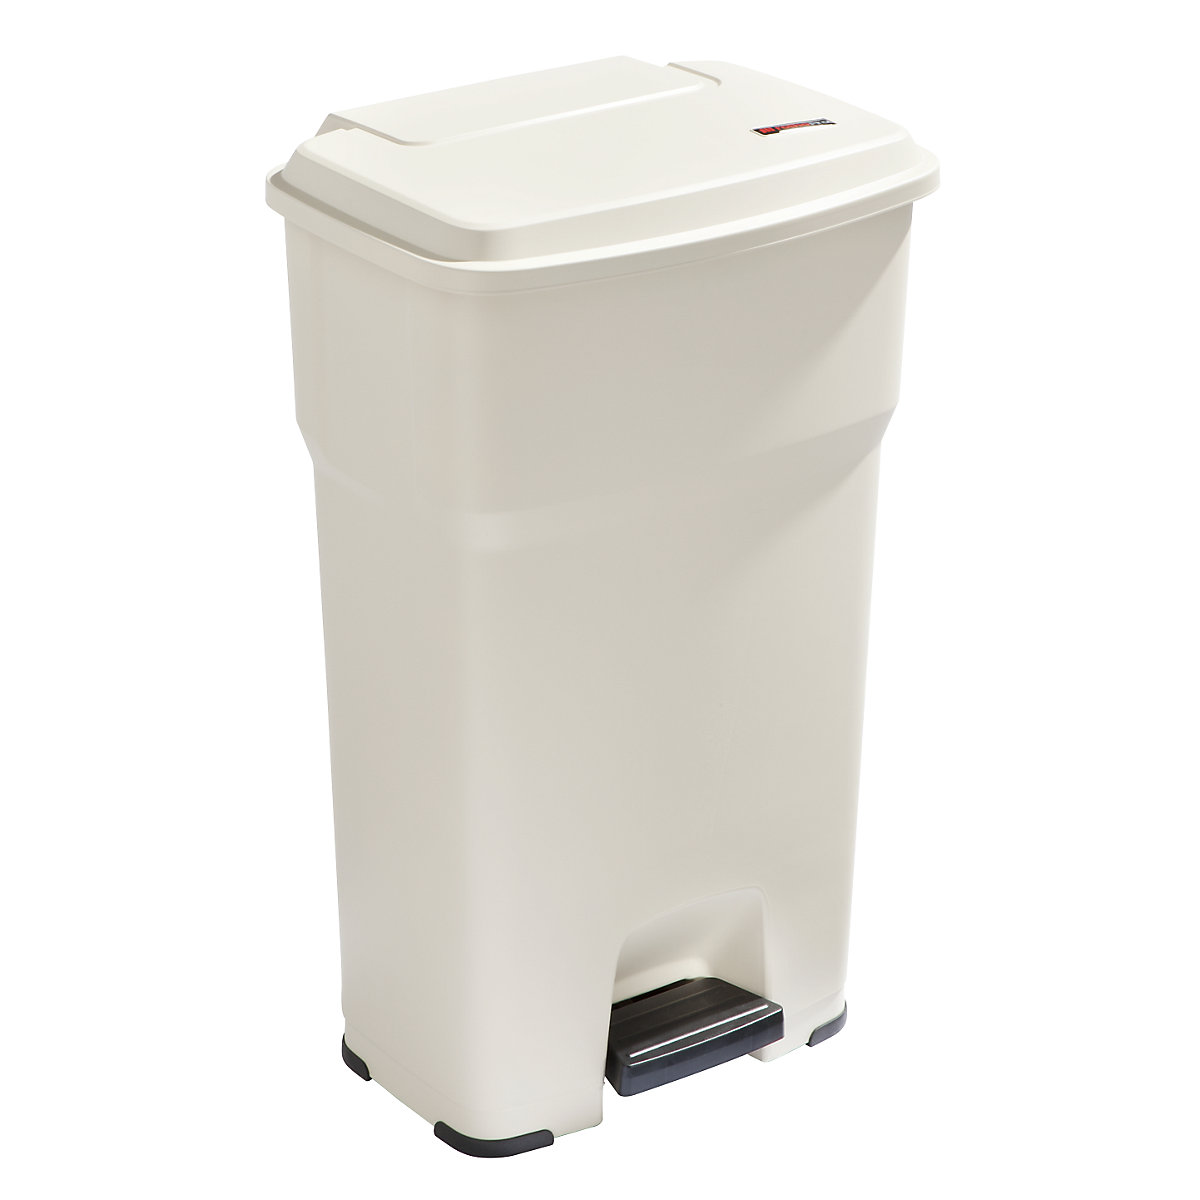 Coletor de lixo com pedal HERA – rothopro, volume 85 l, LxAxP 490 x 790 x 390 mm, bege-10